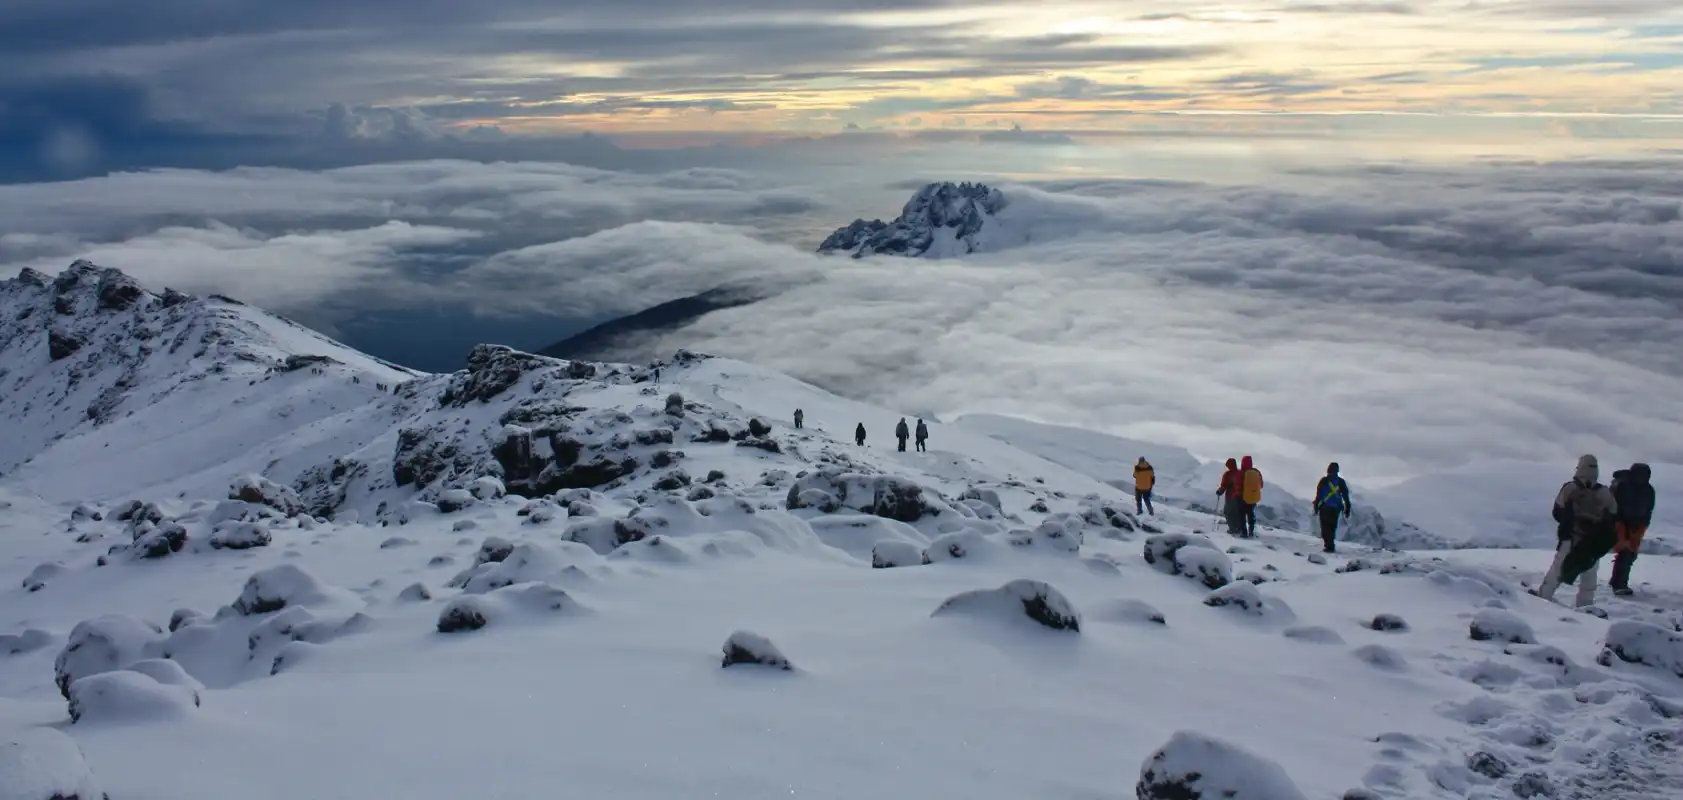 Preparing to climb Mount Kilimanjaro